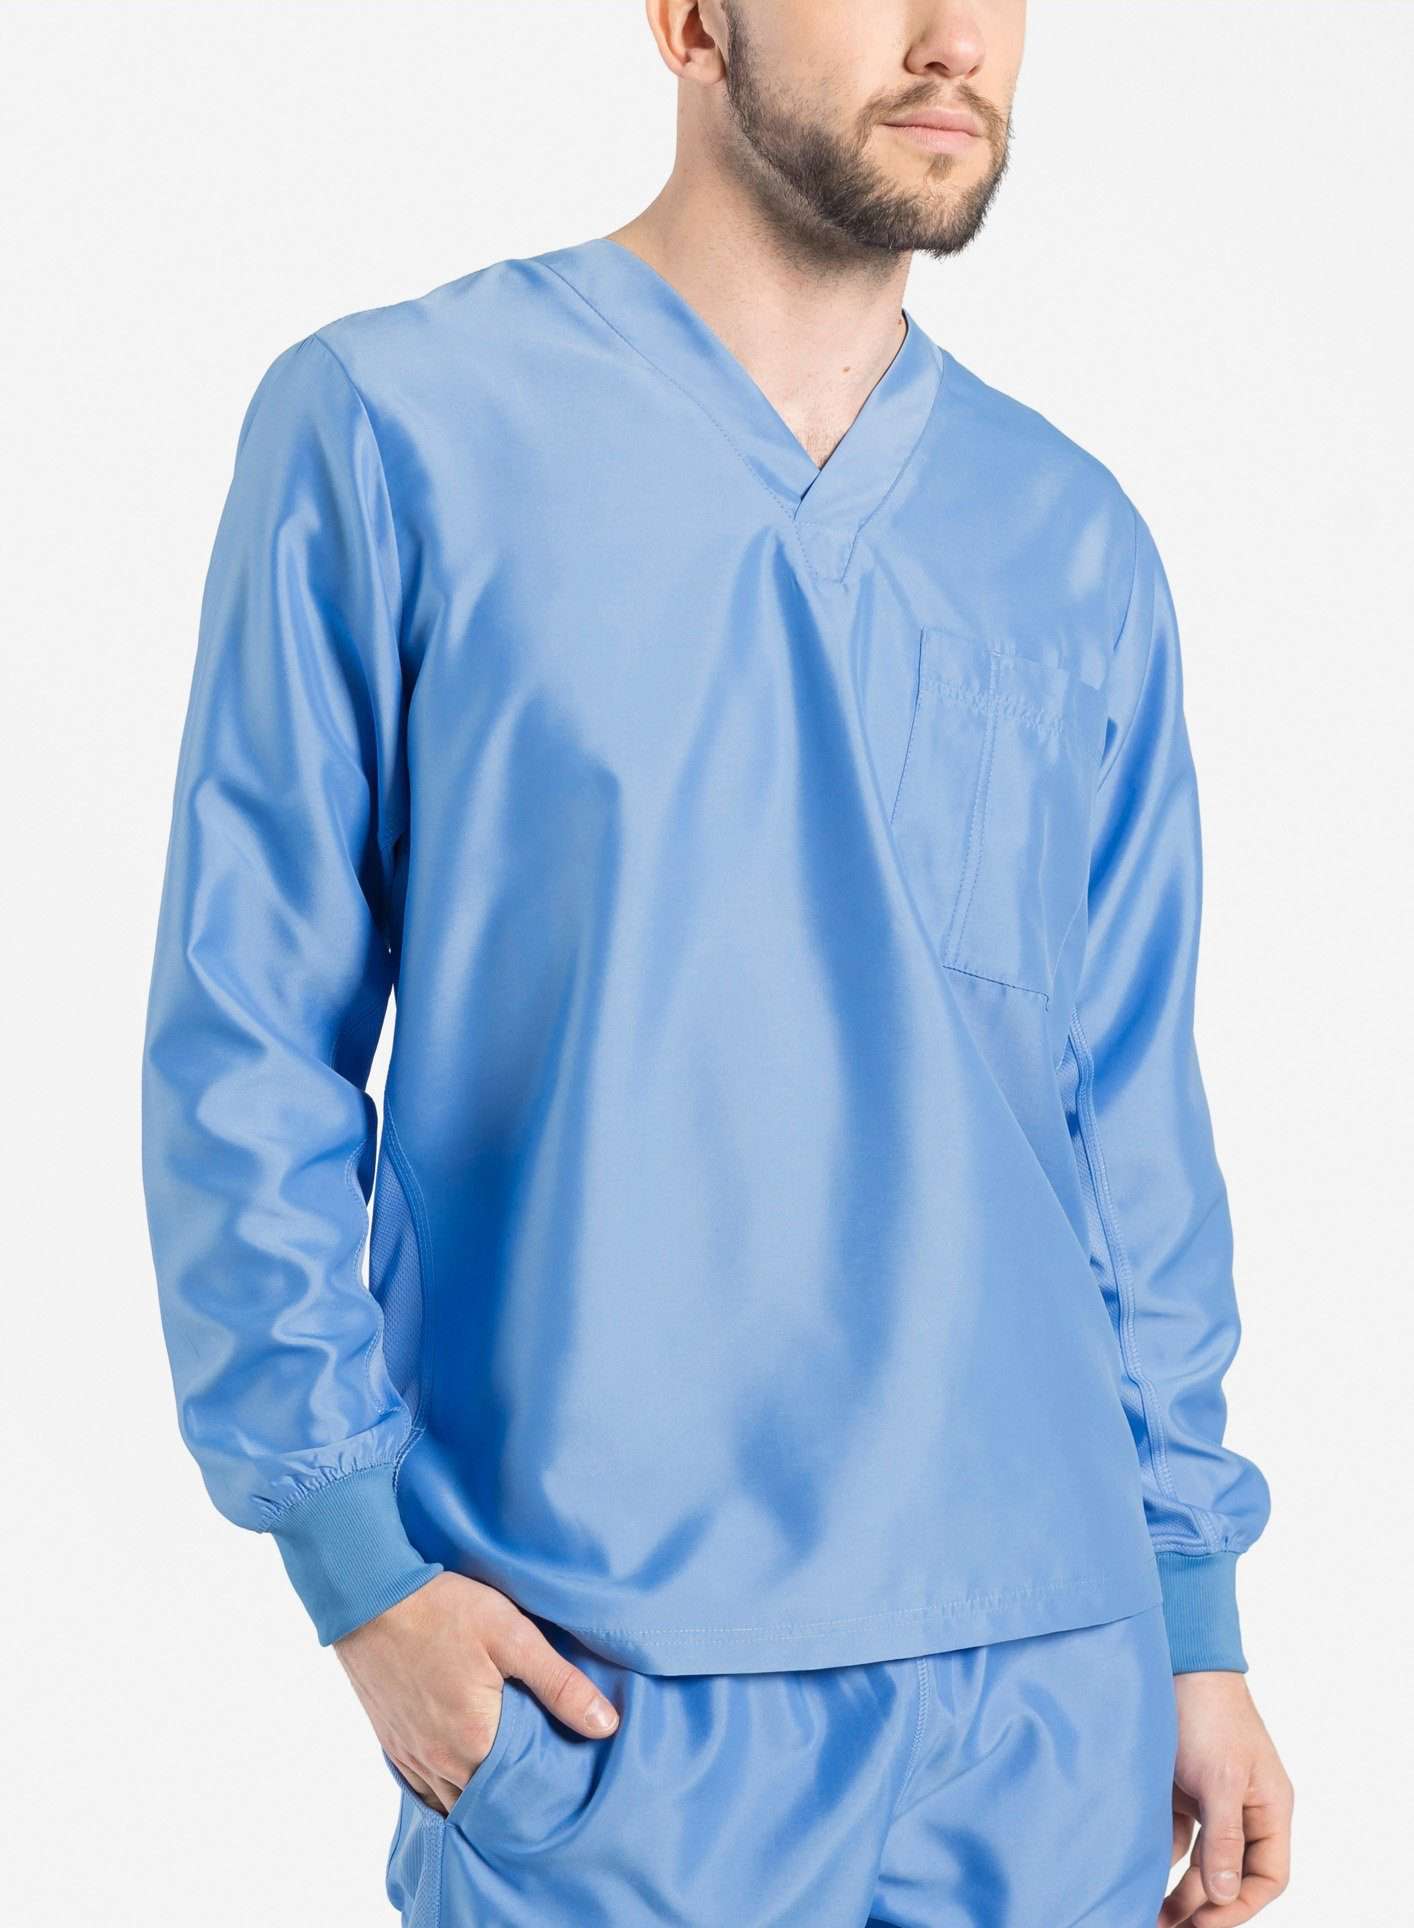 mens Elements long sleeve one pocket scrub top ceil-blue